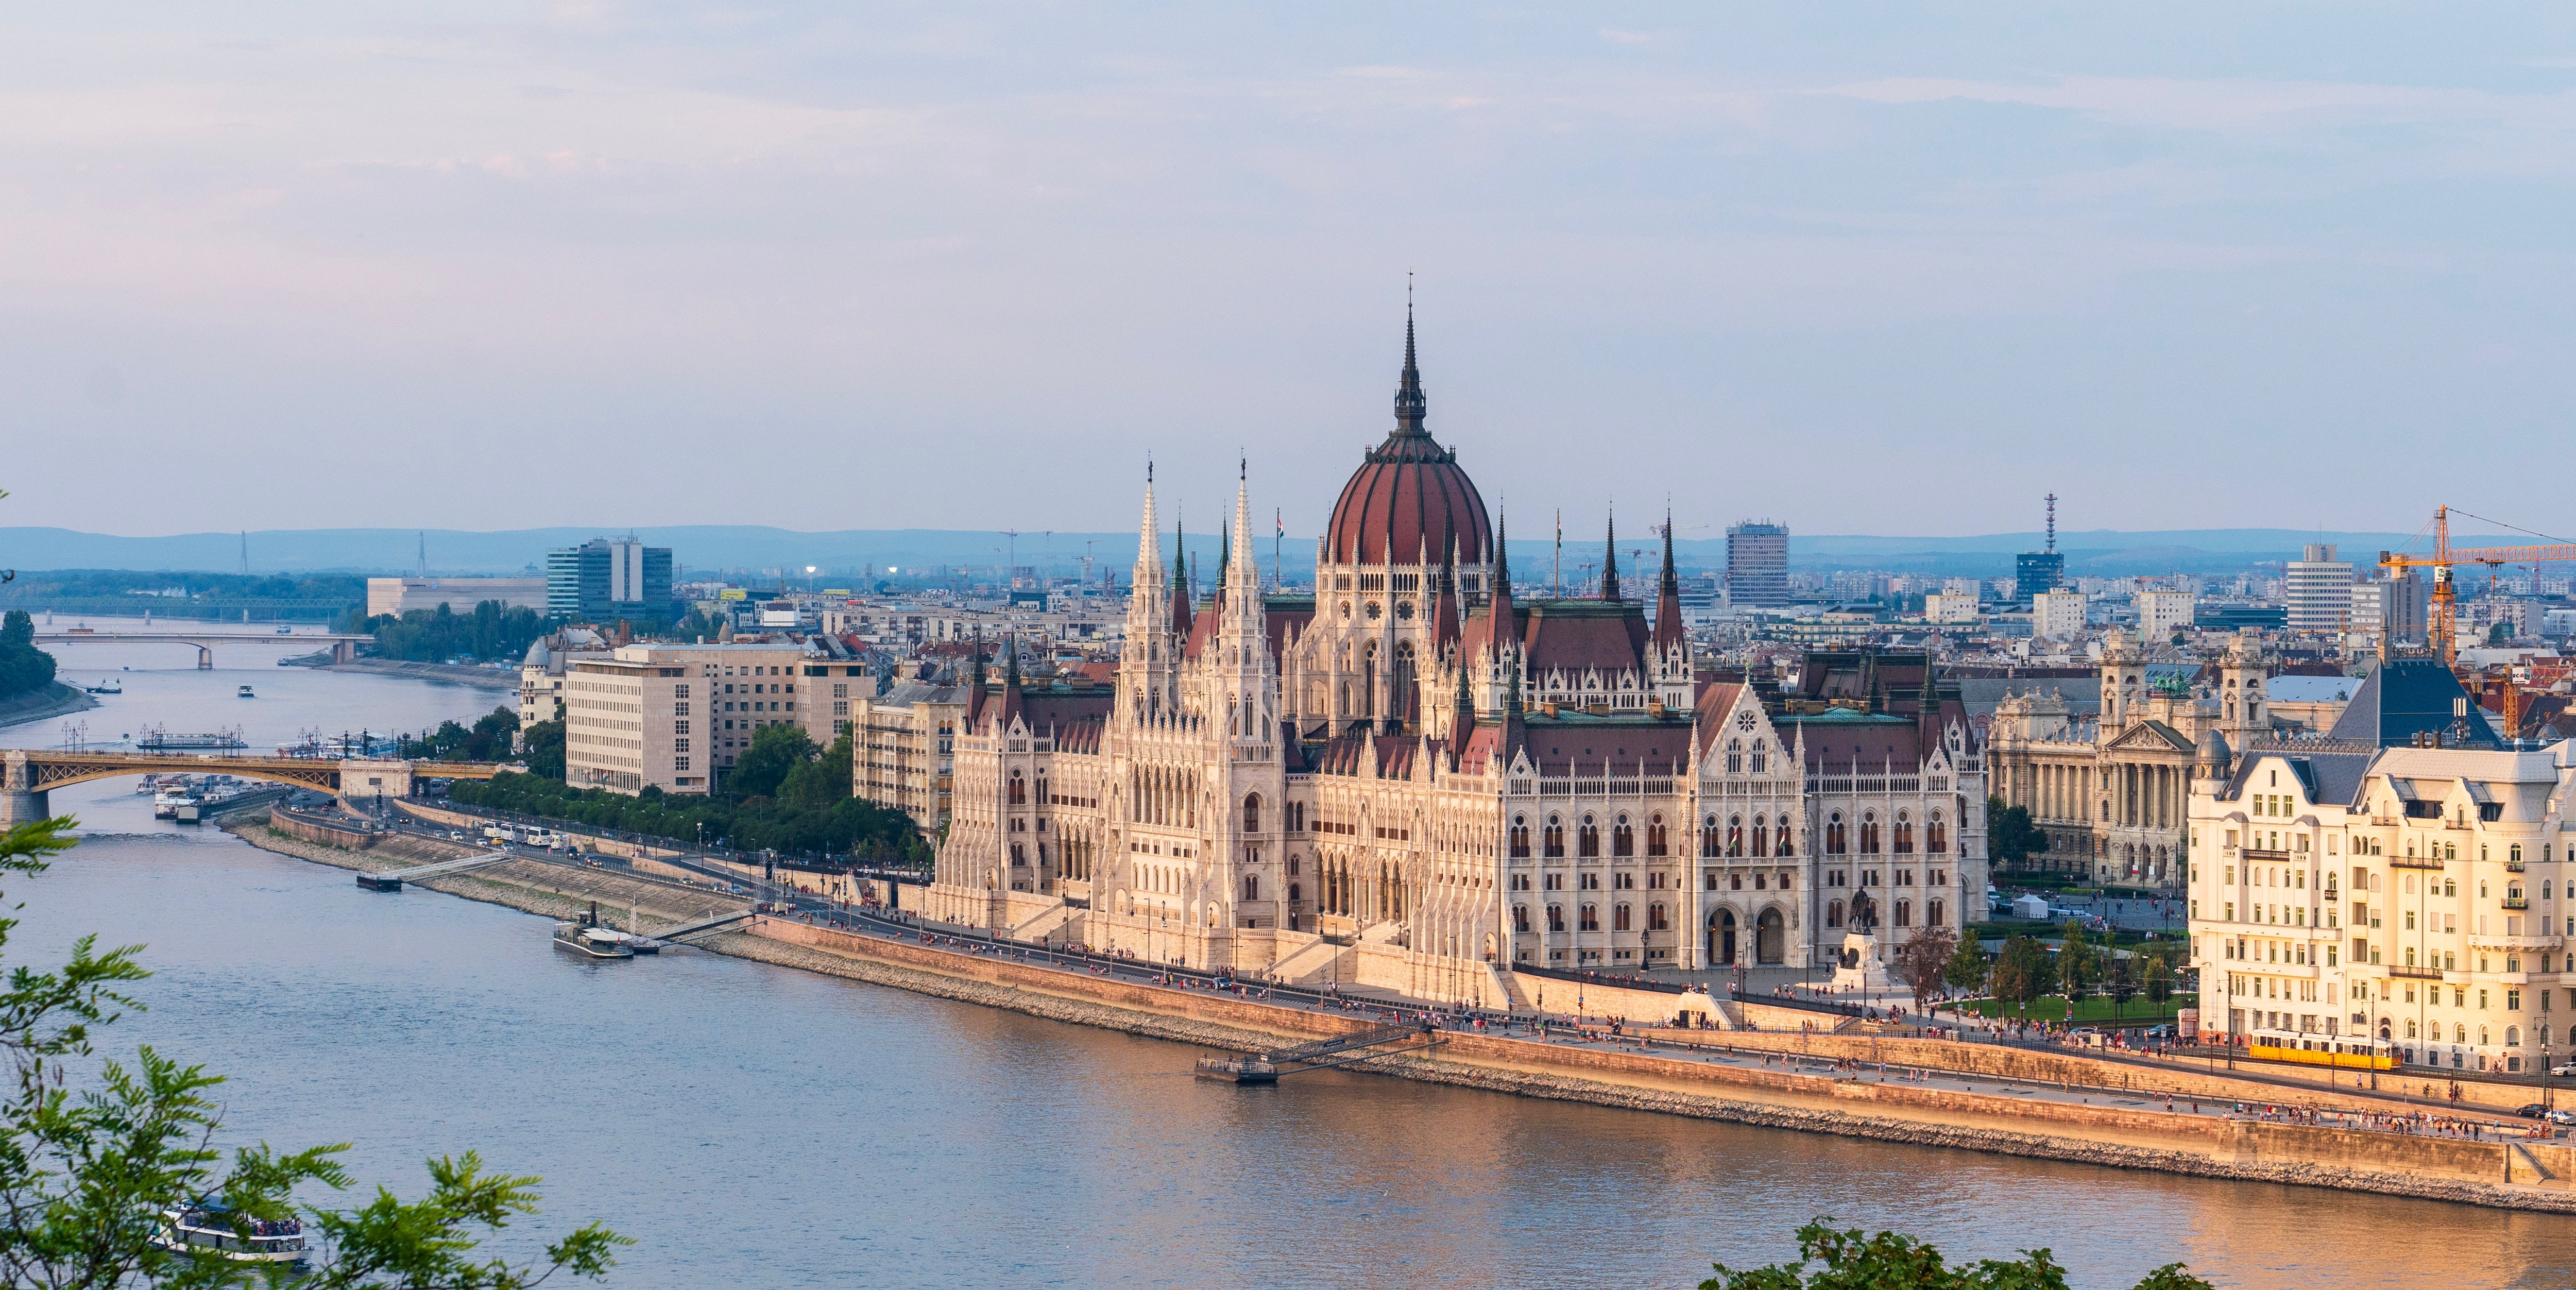 Hungary & Czech Republic: Trip Preparation & Destination Information